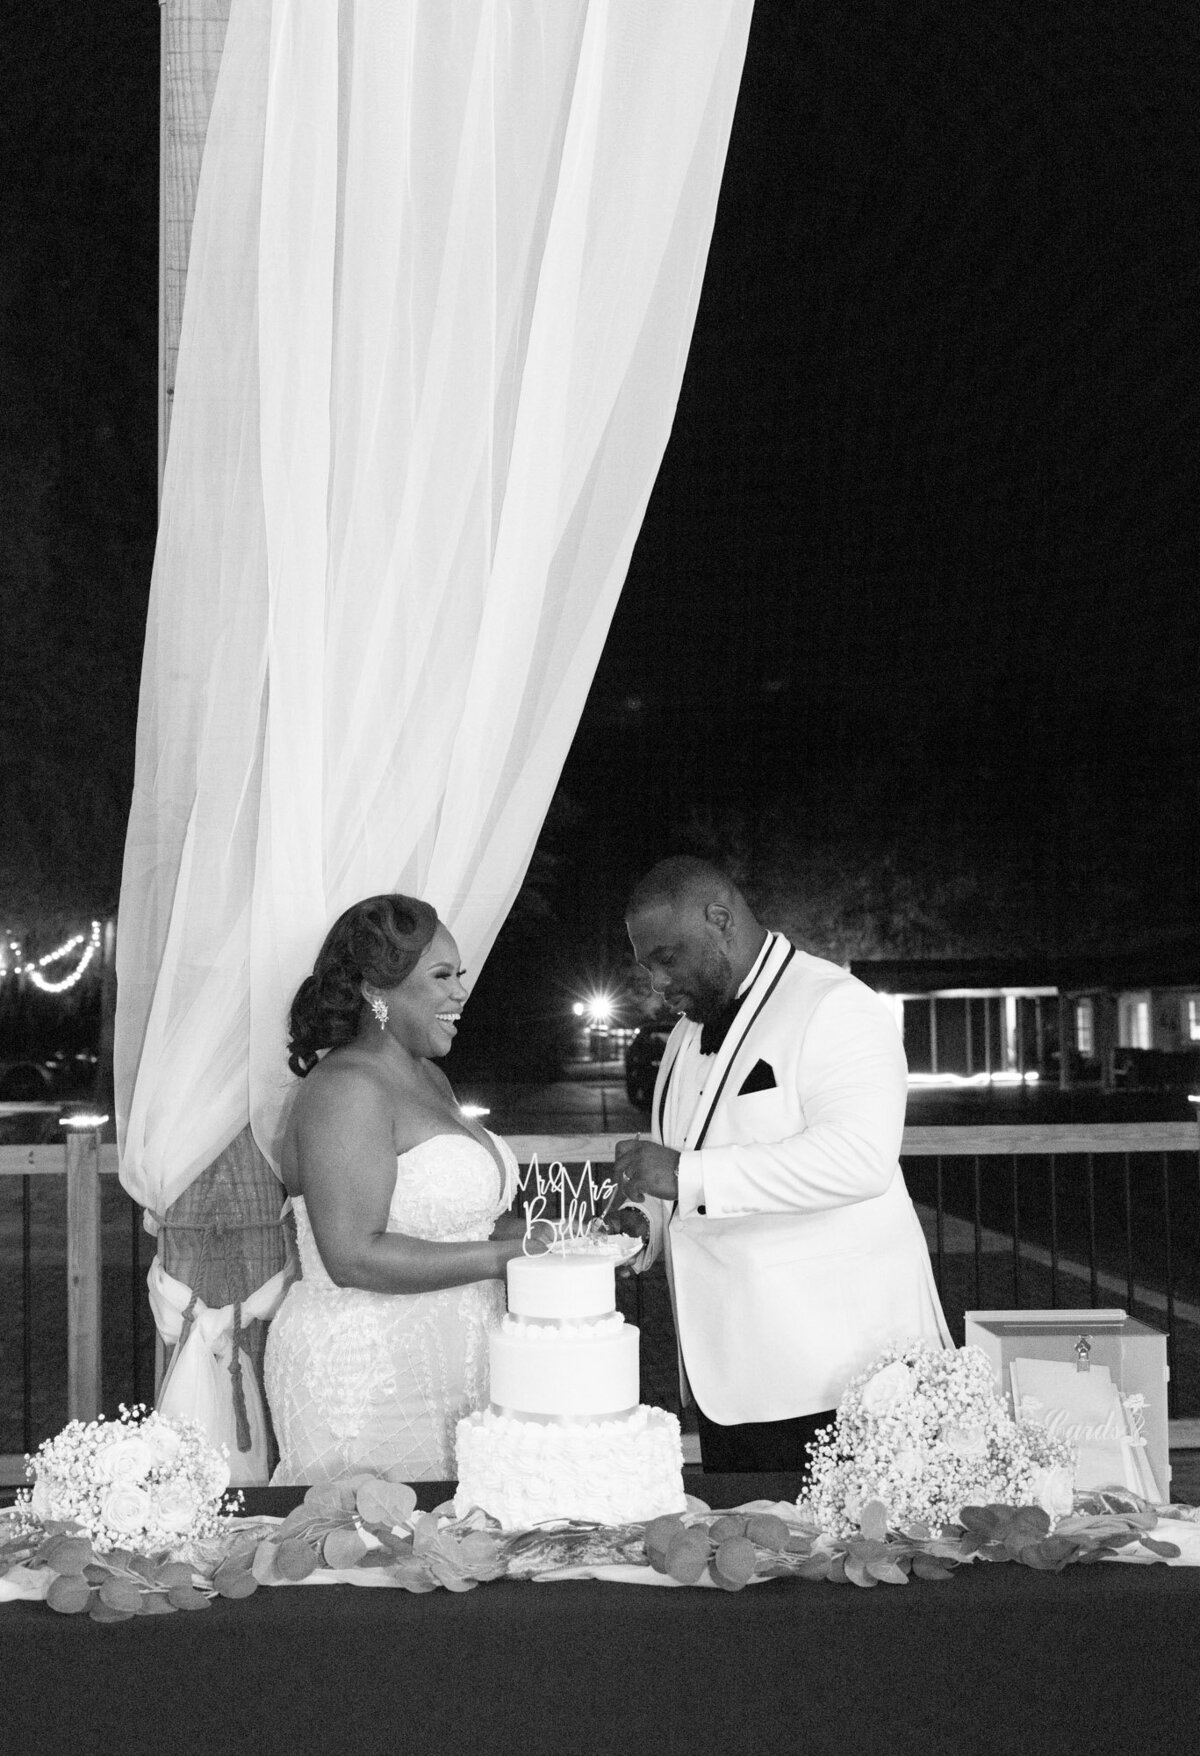 Michael and Mishka-Wedding-Green Cabin Ranch-Astatula, FL-FL Wedding Photographer-Orlando Photographer-Emily Pillon Photography-S-120423-414